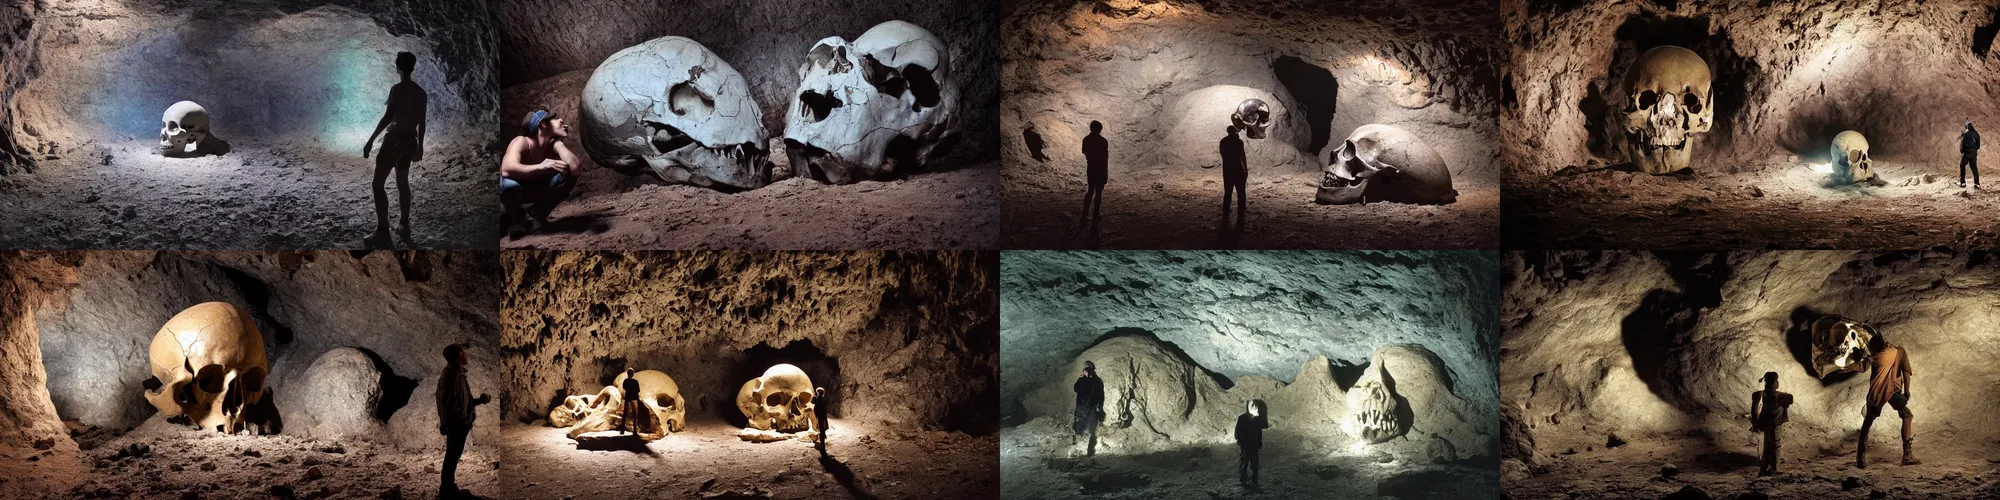 Prompt: An adventurer looks at an abandoned giant human skull in a dark cave, 4k digital art, Ektachrome photograph, volumetric lighting, f8 aperture, cinematic Eastman 5384 film